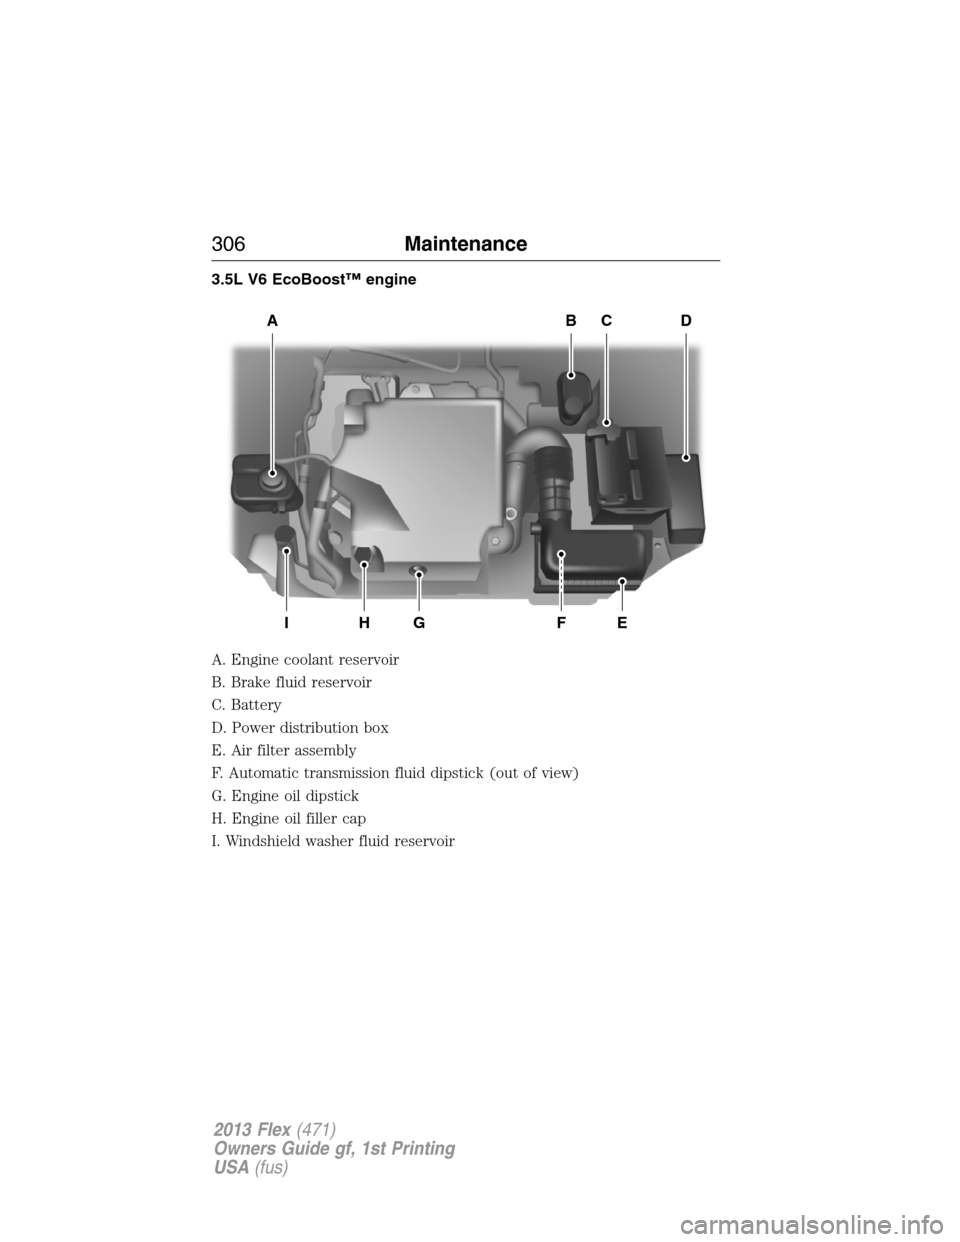 FORD FLEX 2013 1.G Owners Manual 3.5L V6 EcoBoost™ engine
A. Engine coolant reservoir
B. Brake fluid reservoir
C. Battery
D. Power distribution box
E. Air filter assembly
F. Automatic transmission fluid dipstick (out of view)
G. En